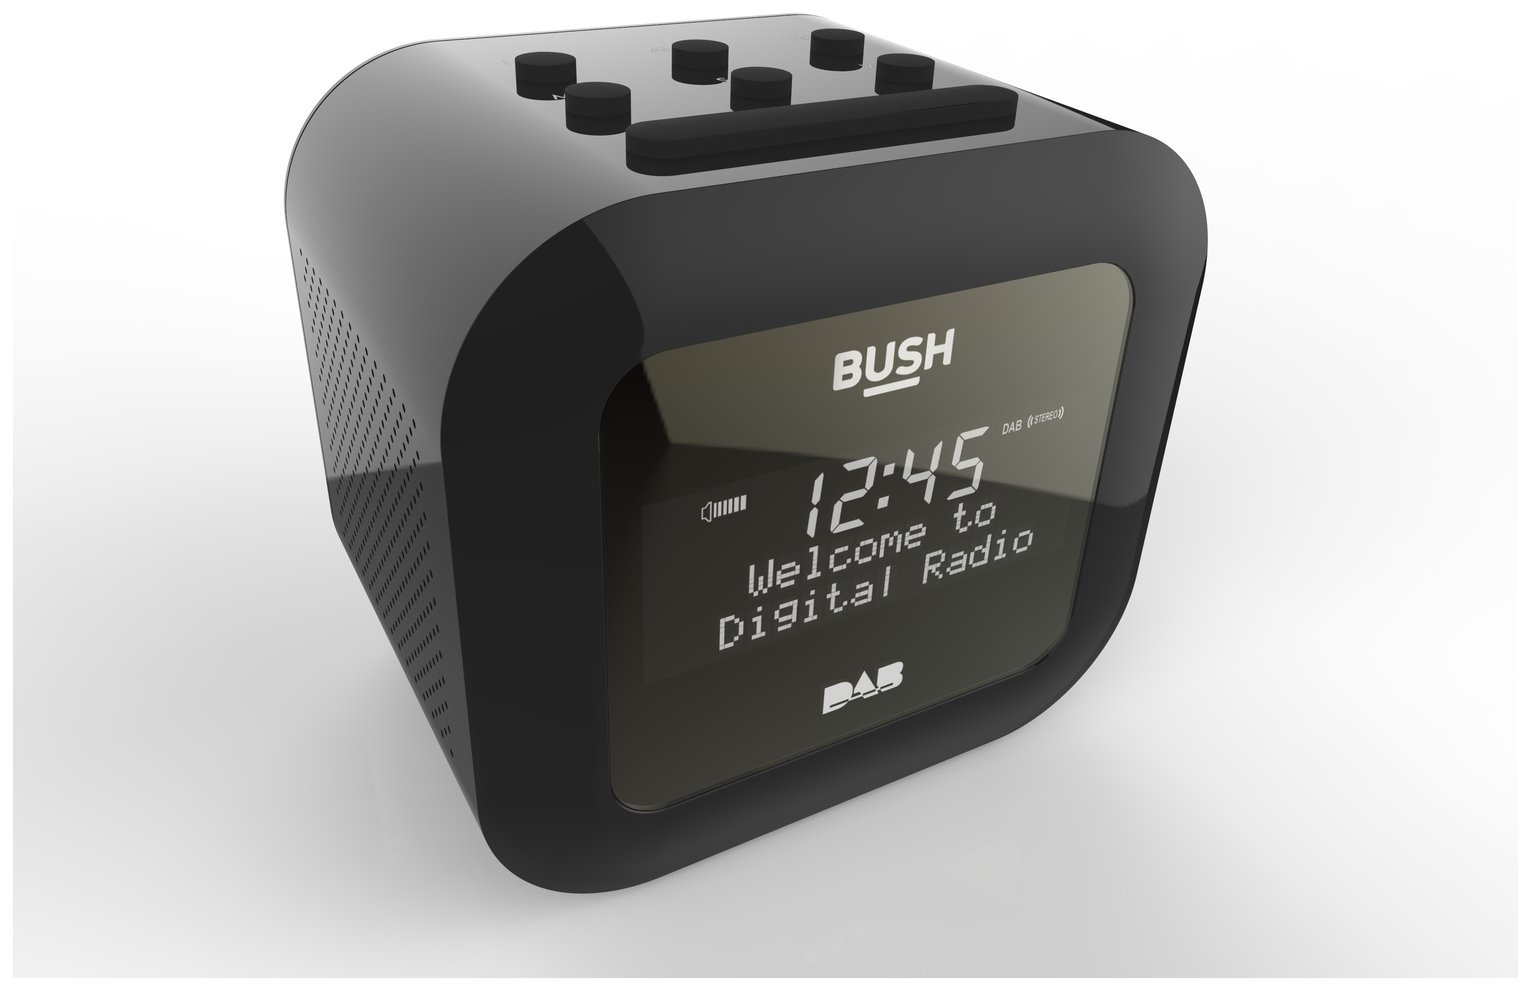 Bush USB DAB Clock Radio Review